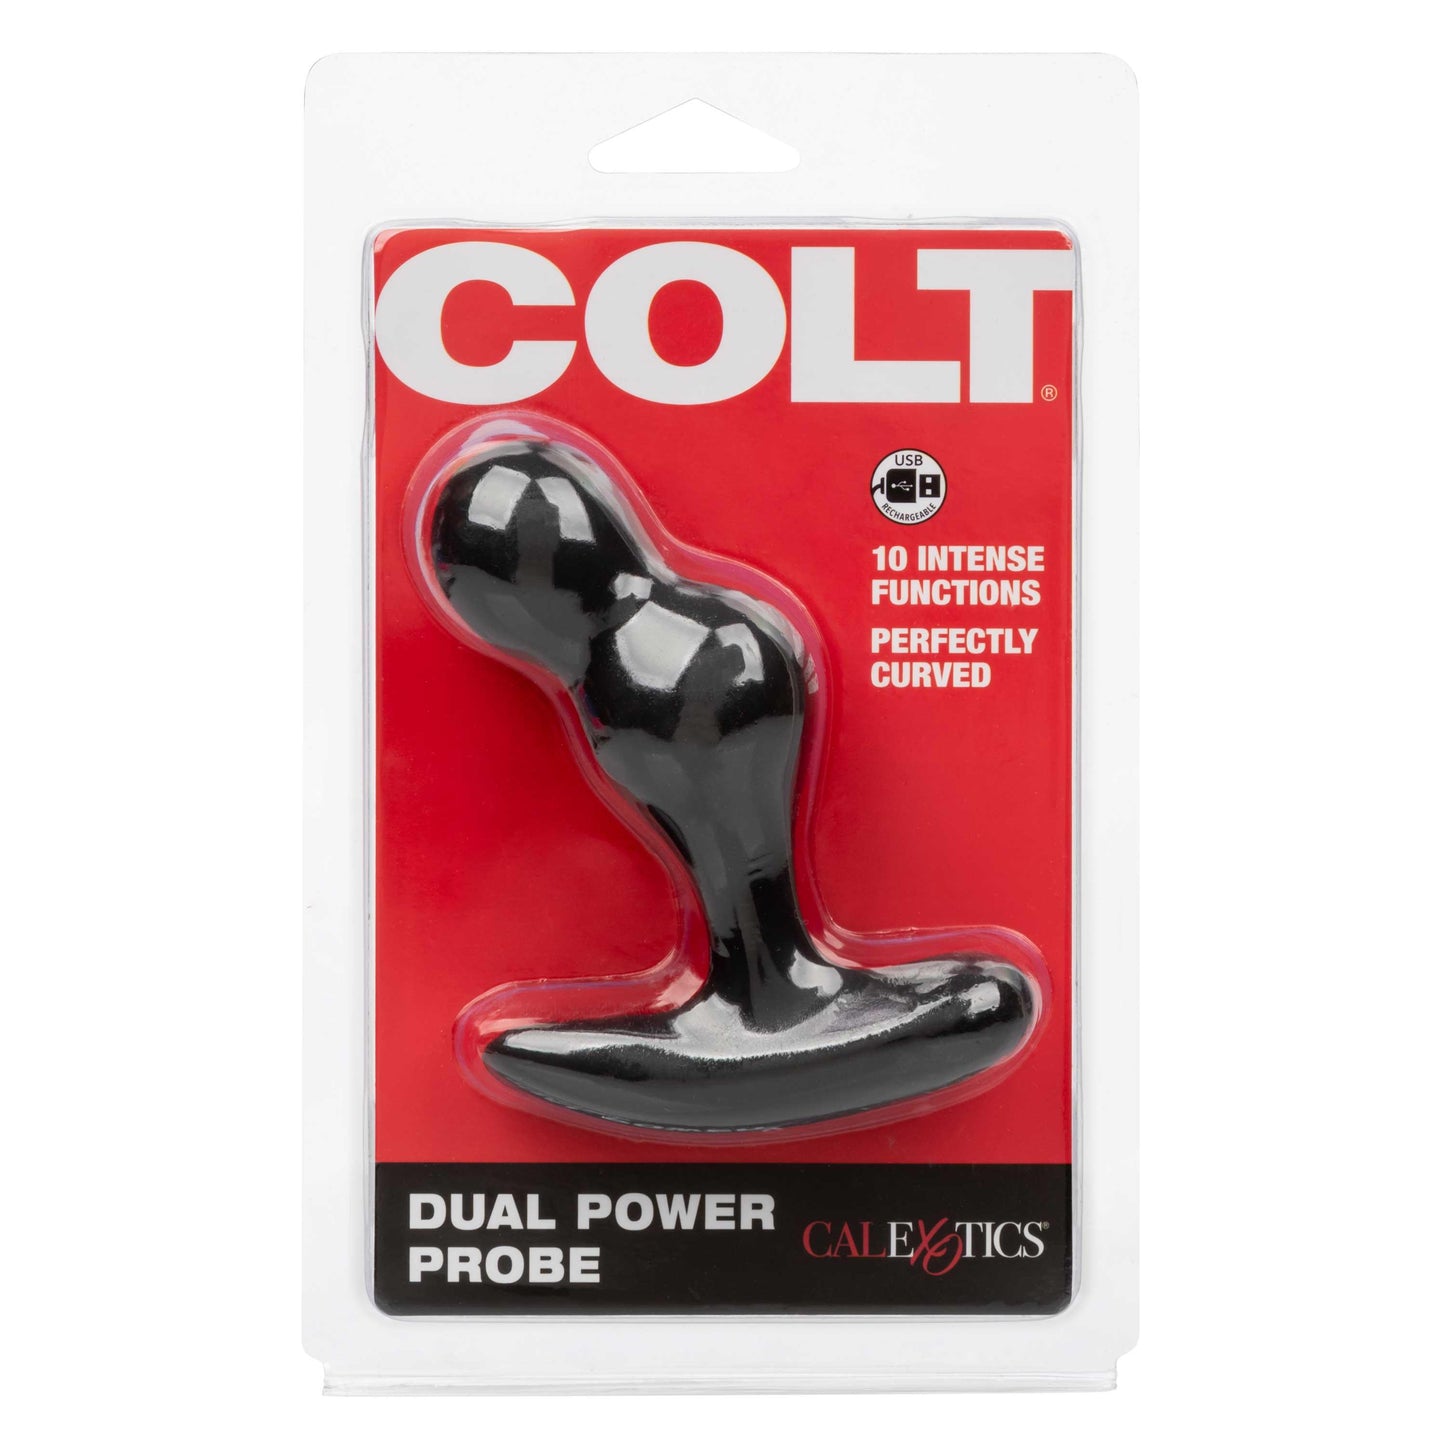 Colt Dual Power Probe - Black - My Sex Toy Hub